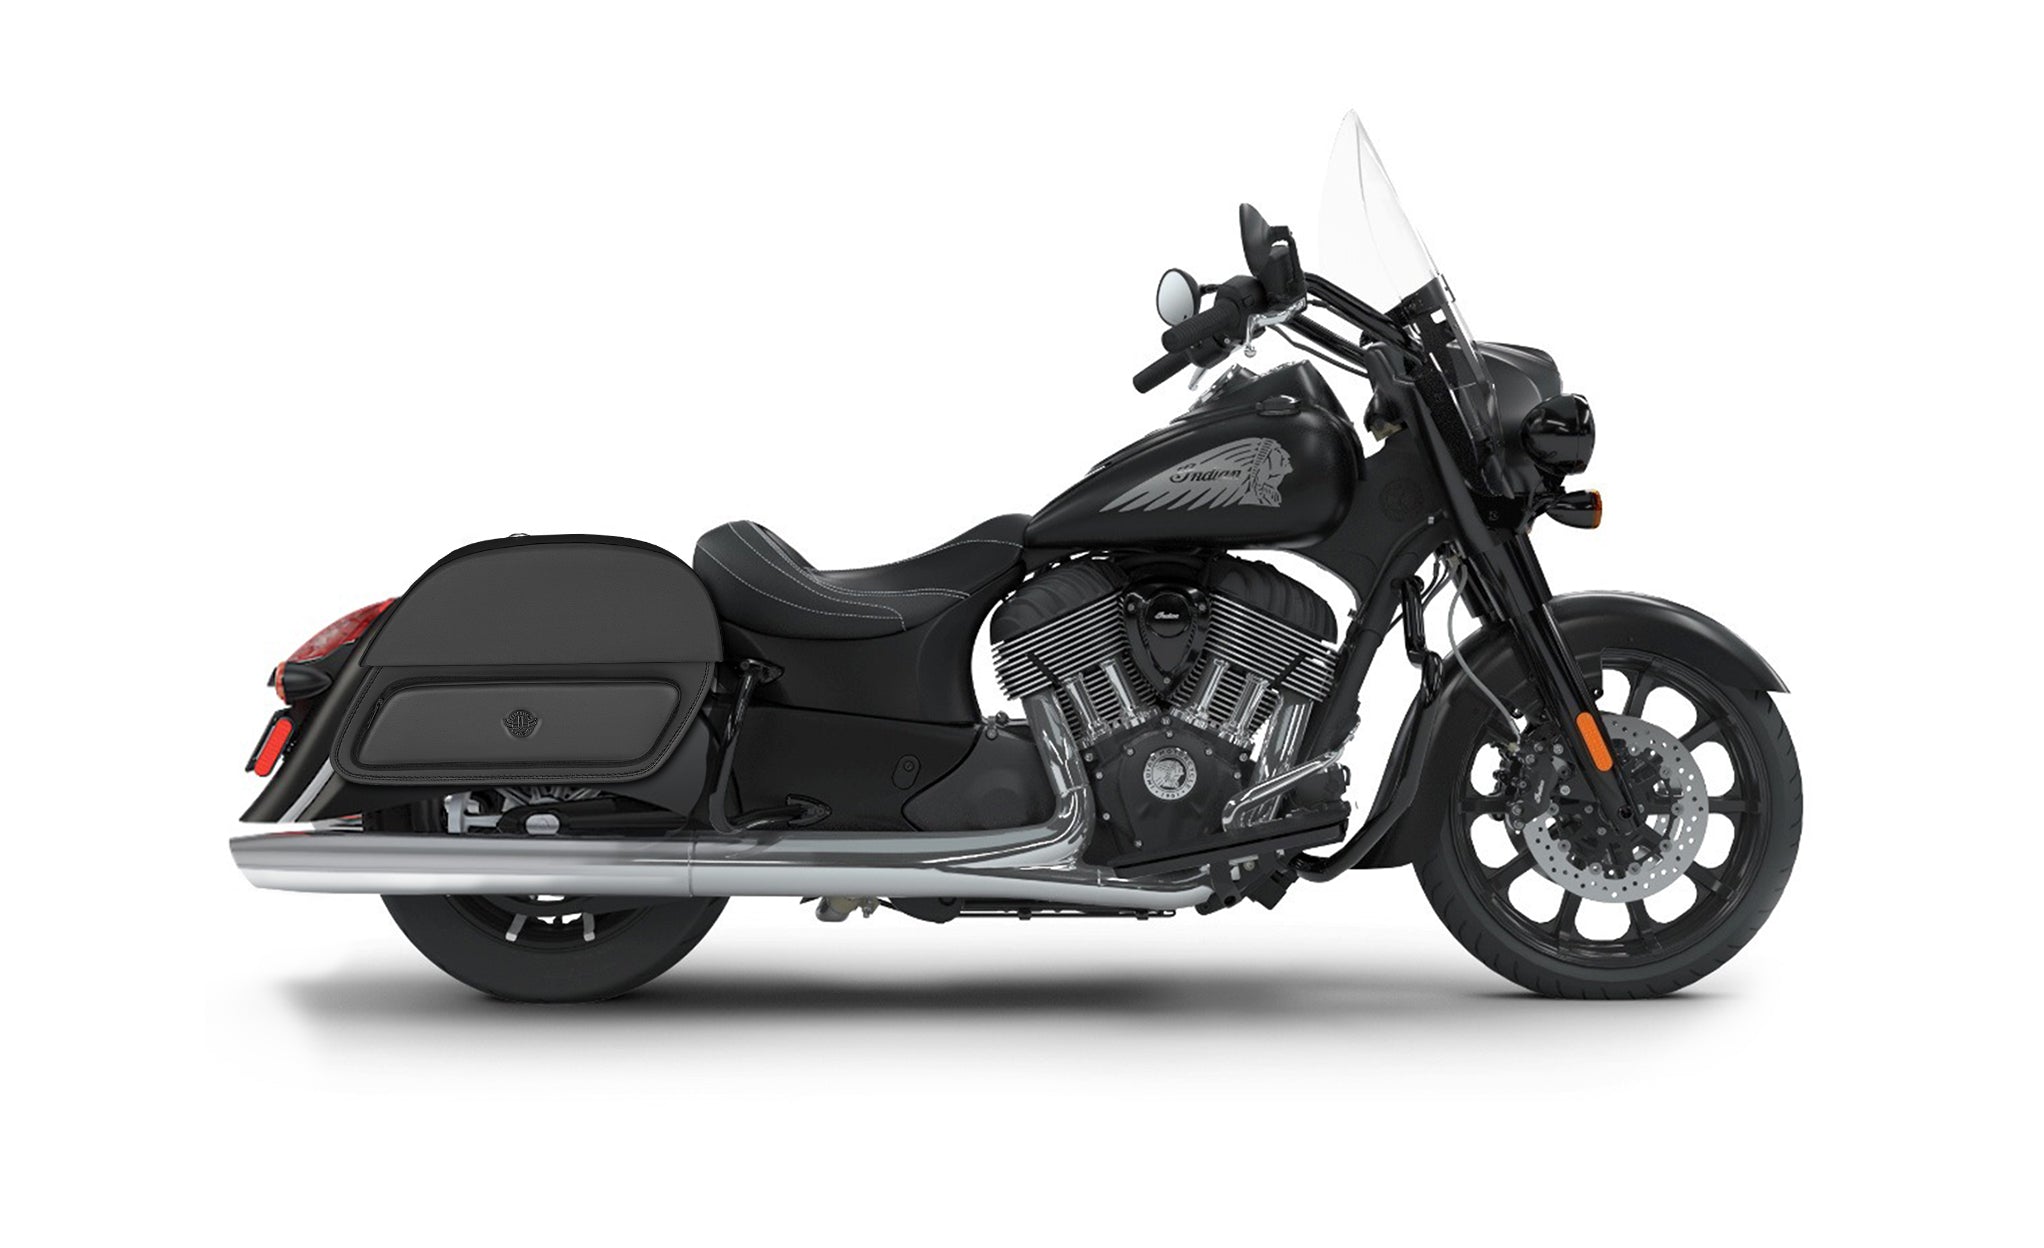 33L - Pantheon Large Indian Springfield Darkhorse Motorcycle Saddlebags on Bike Photo @expand